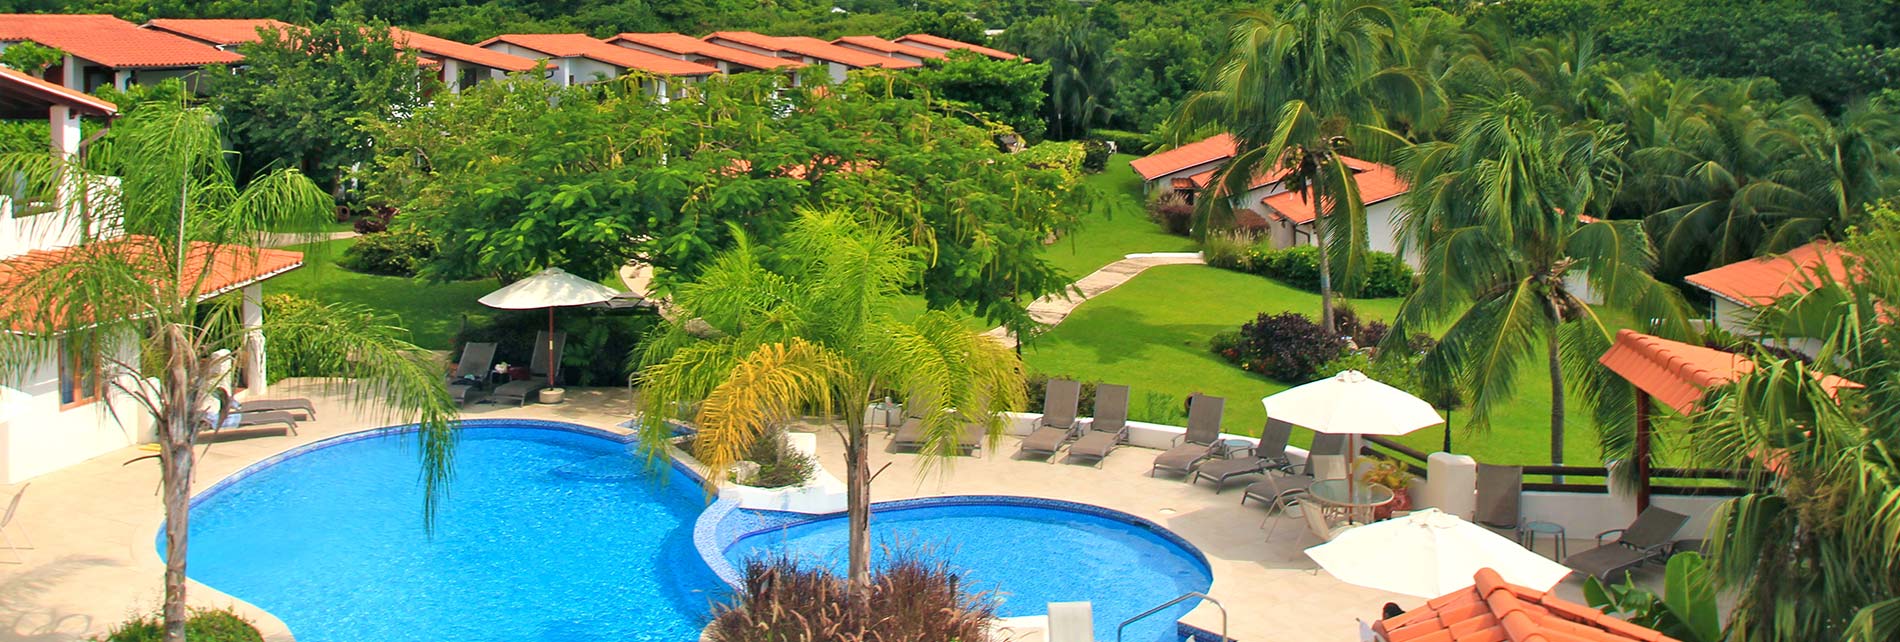 Resorts In Barbados